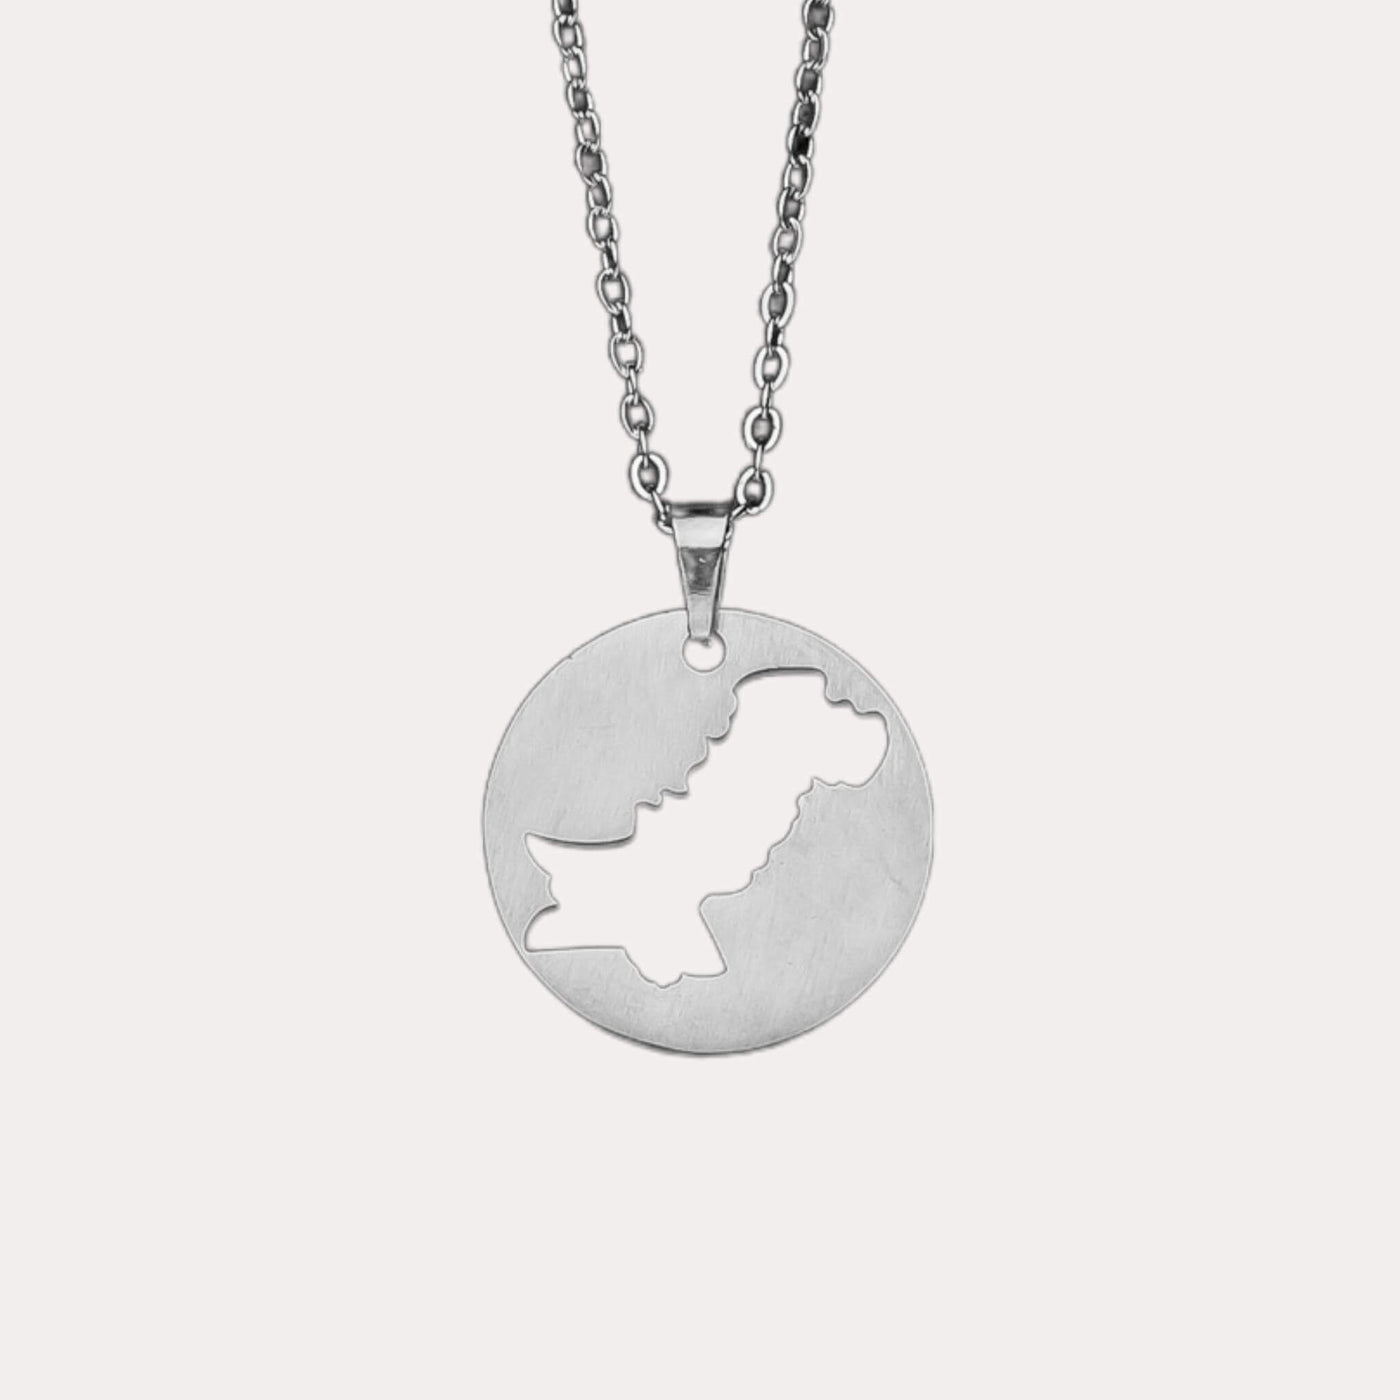 ZUDO-Pakistan-Map-Necklace-Silver-Thin-CableChain